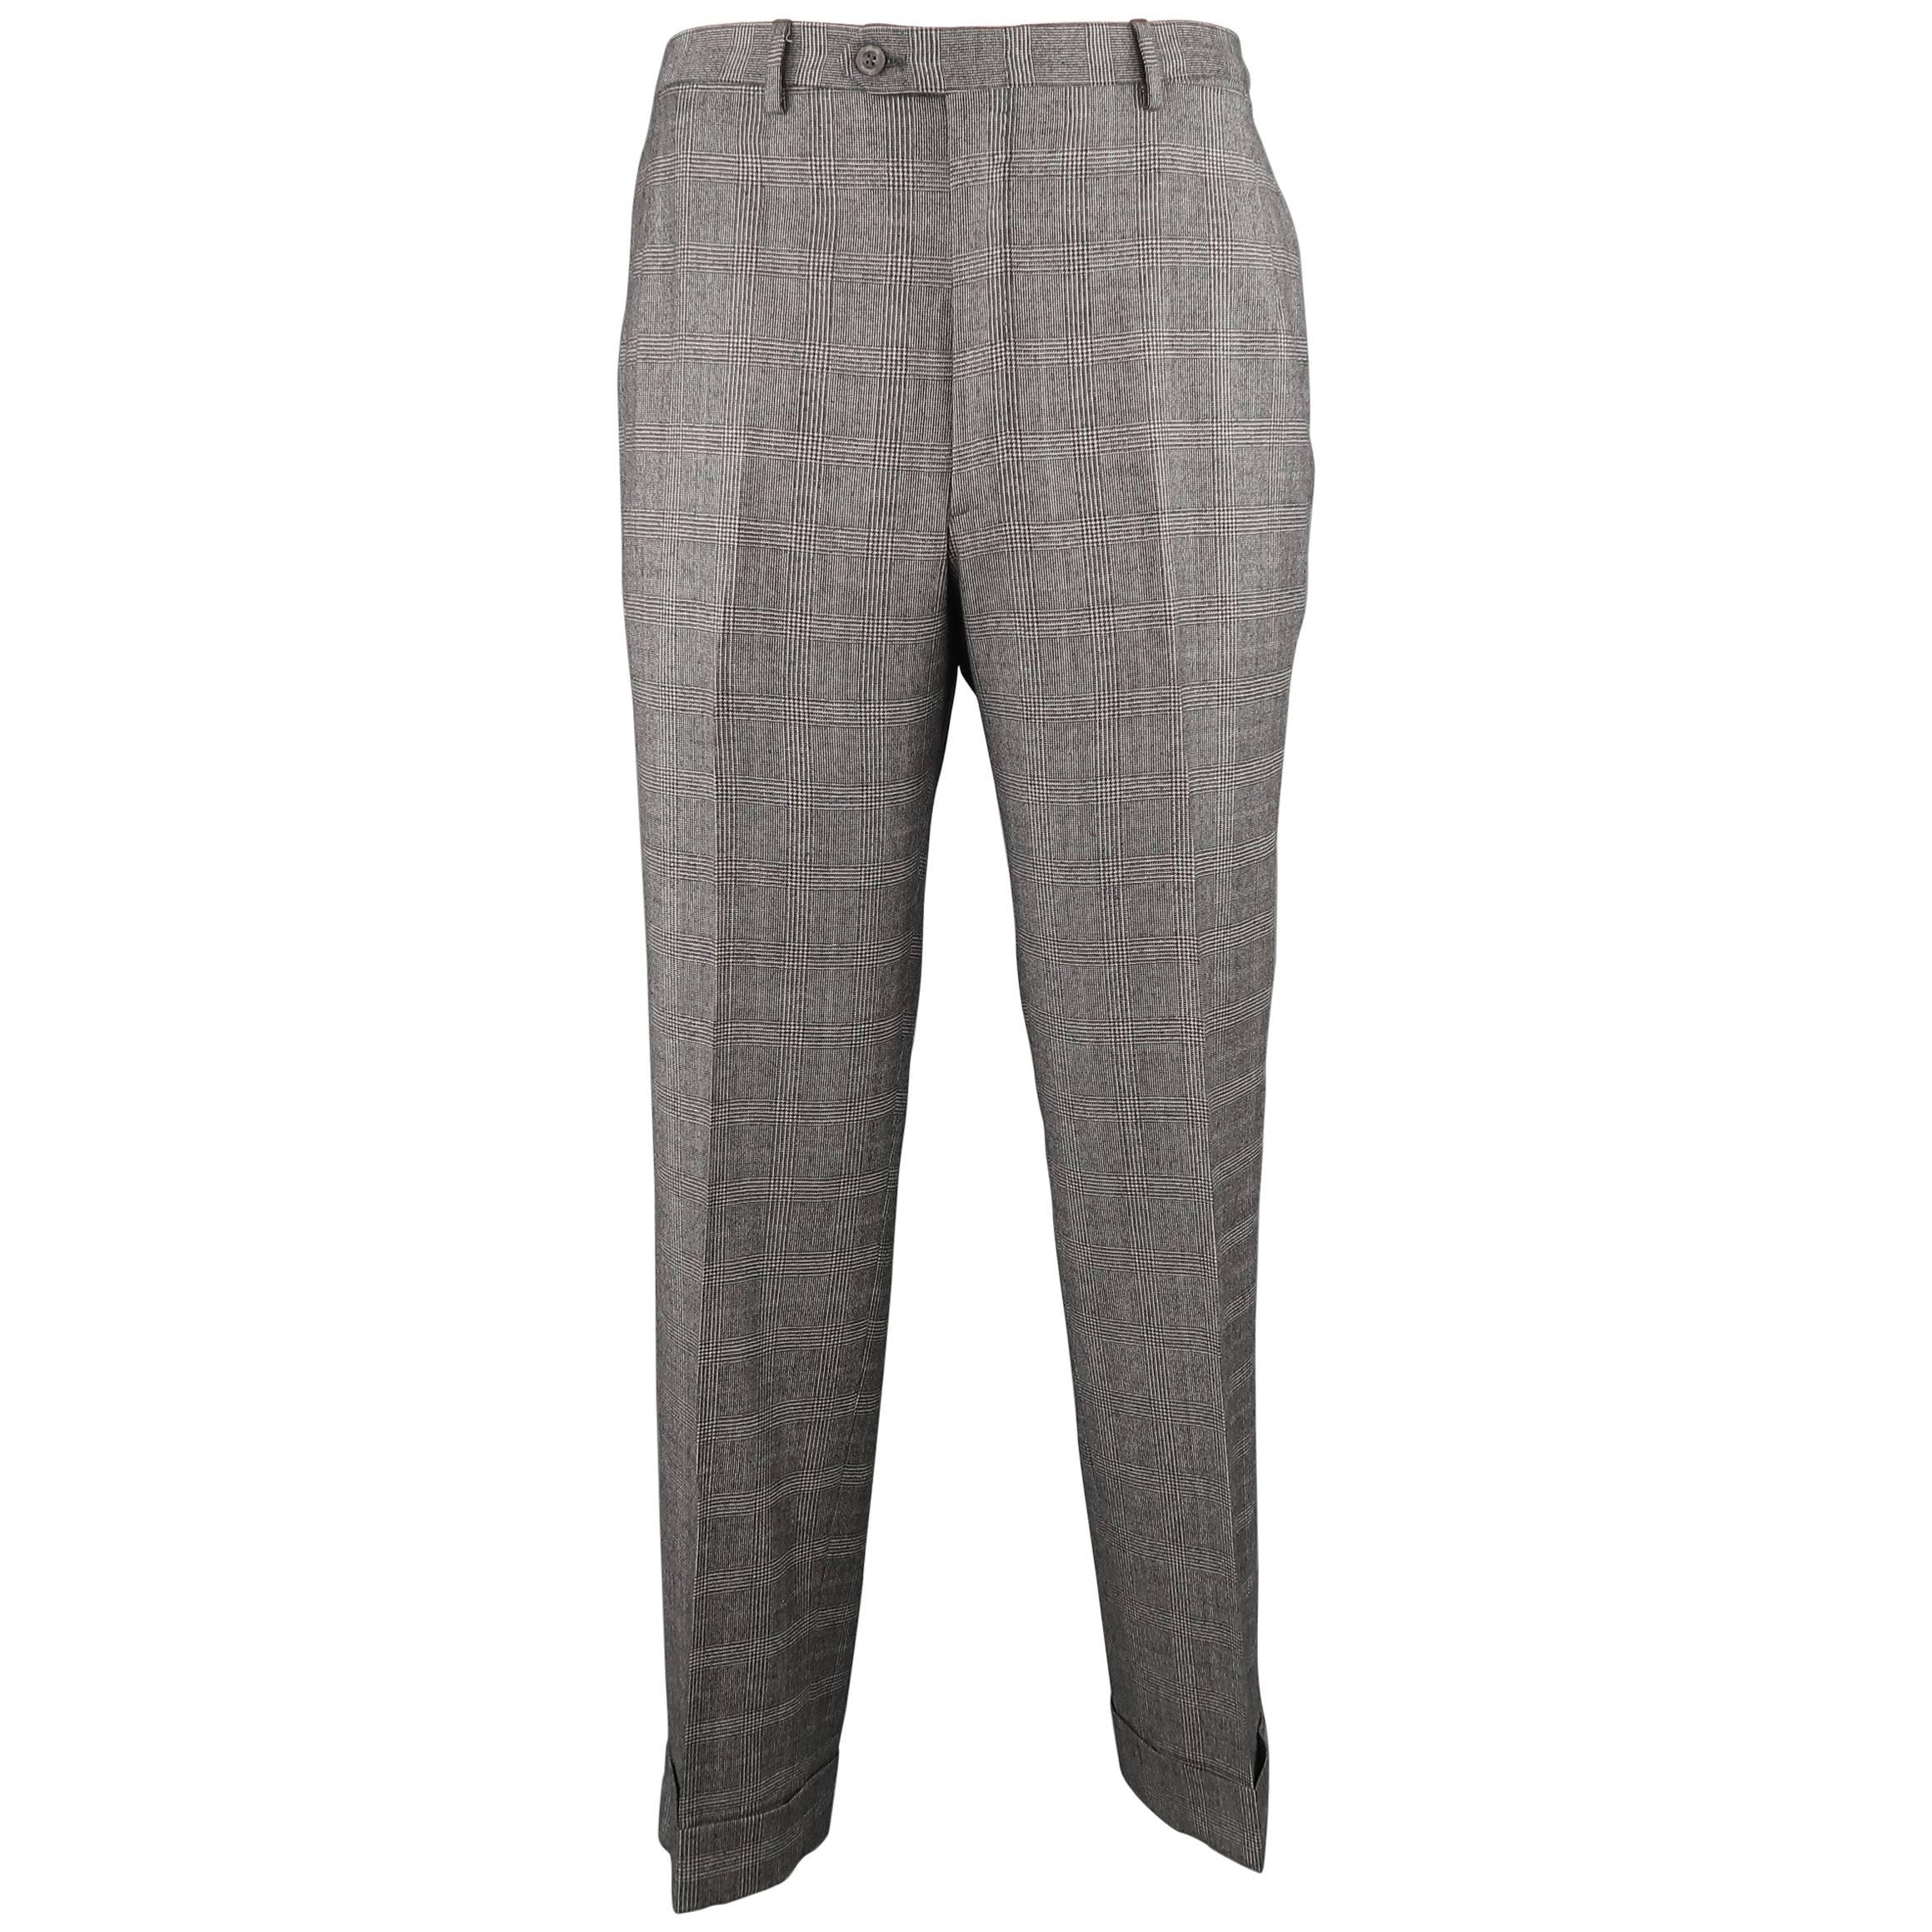 Men's BRIONI Size 34 Grey Glenplaid Wool Blend Flat Front Cuffed Dress Pants